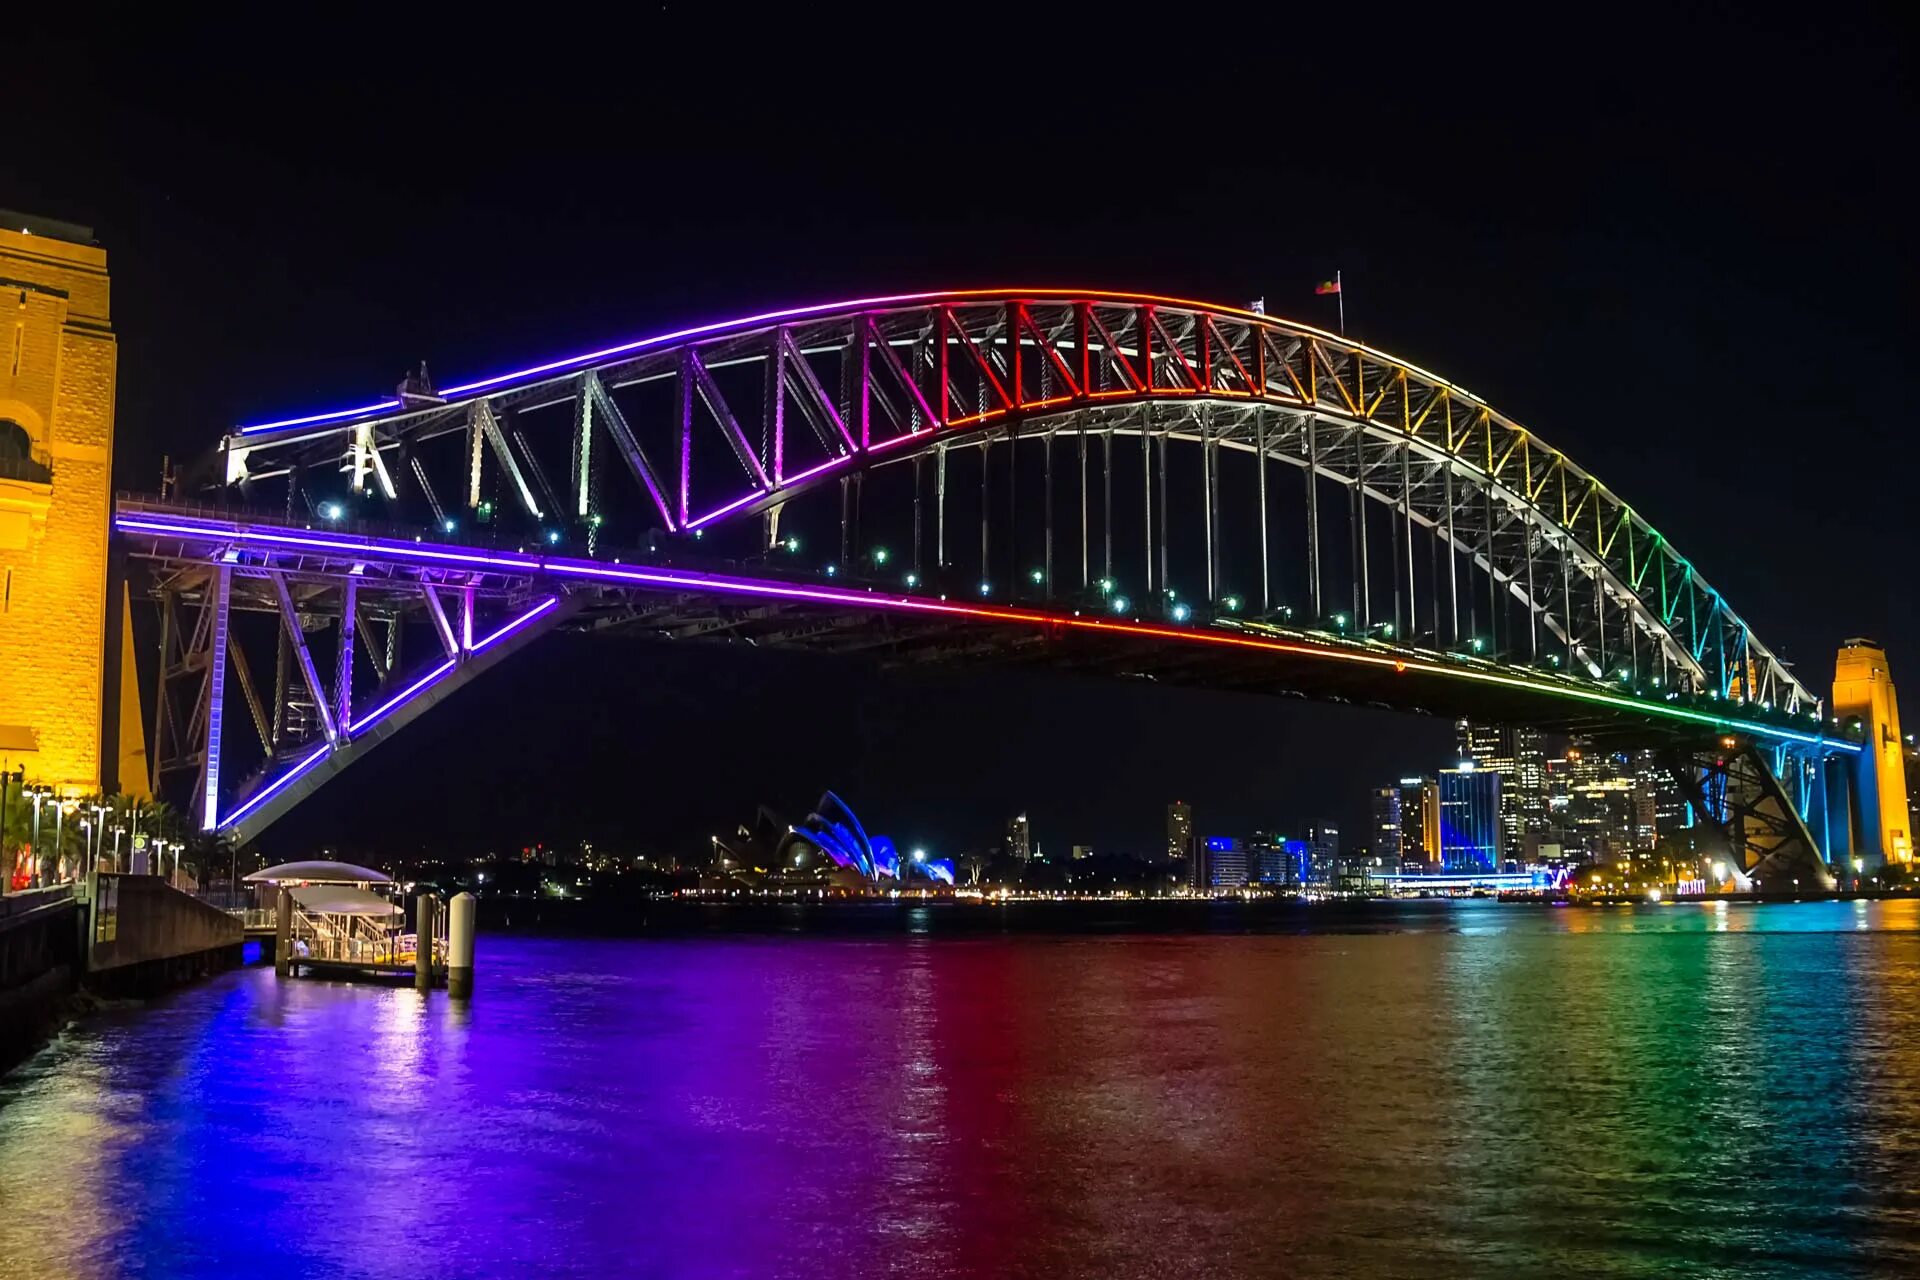 Бридж. Сиднейский мост Харбор-бридж. Австралия.Сидней.мост Харбор-бридж. Мост Харбор бридж в Австралии. Сиднейский арочный мост Харбор-бридж..